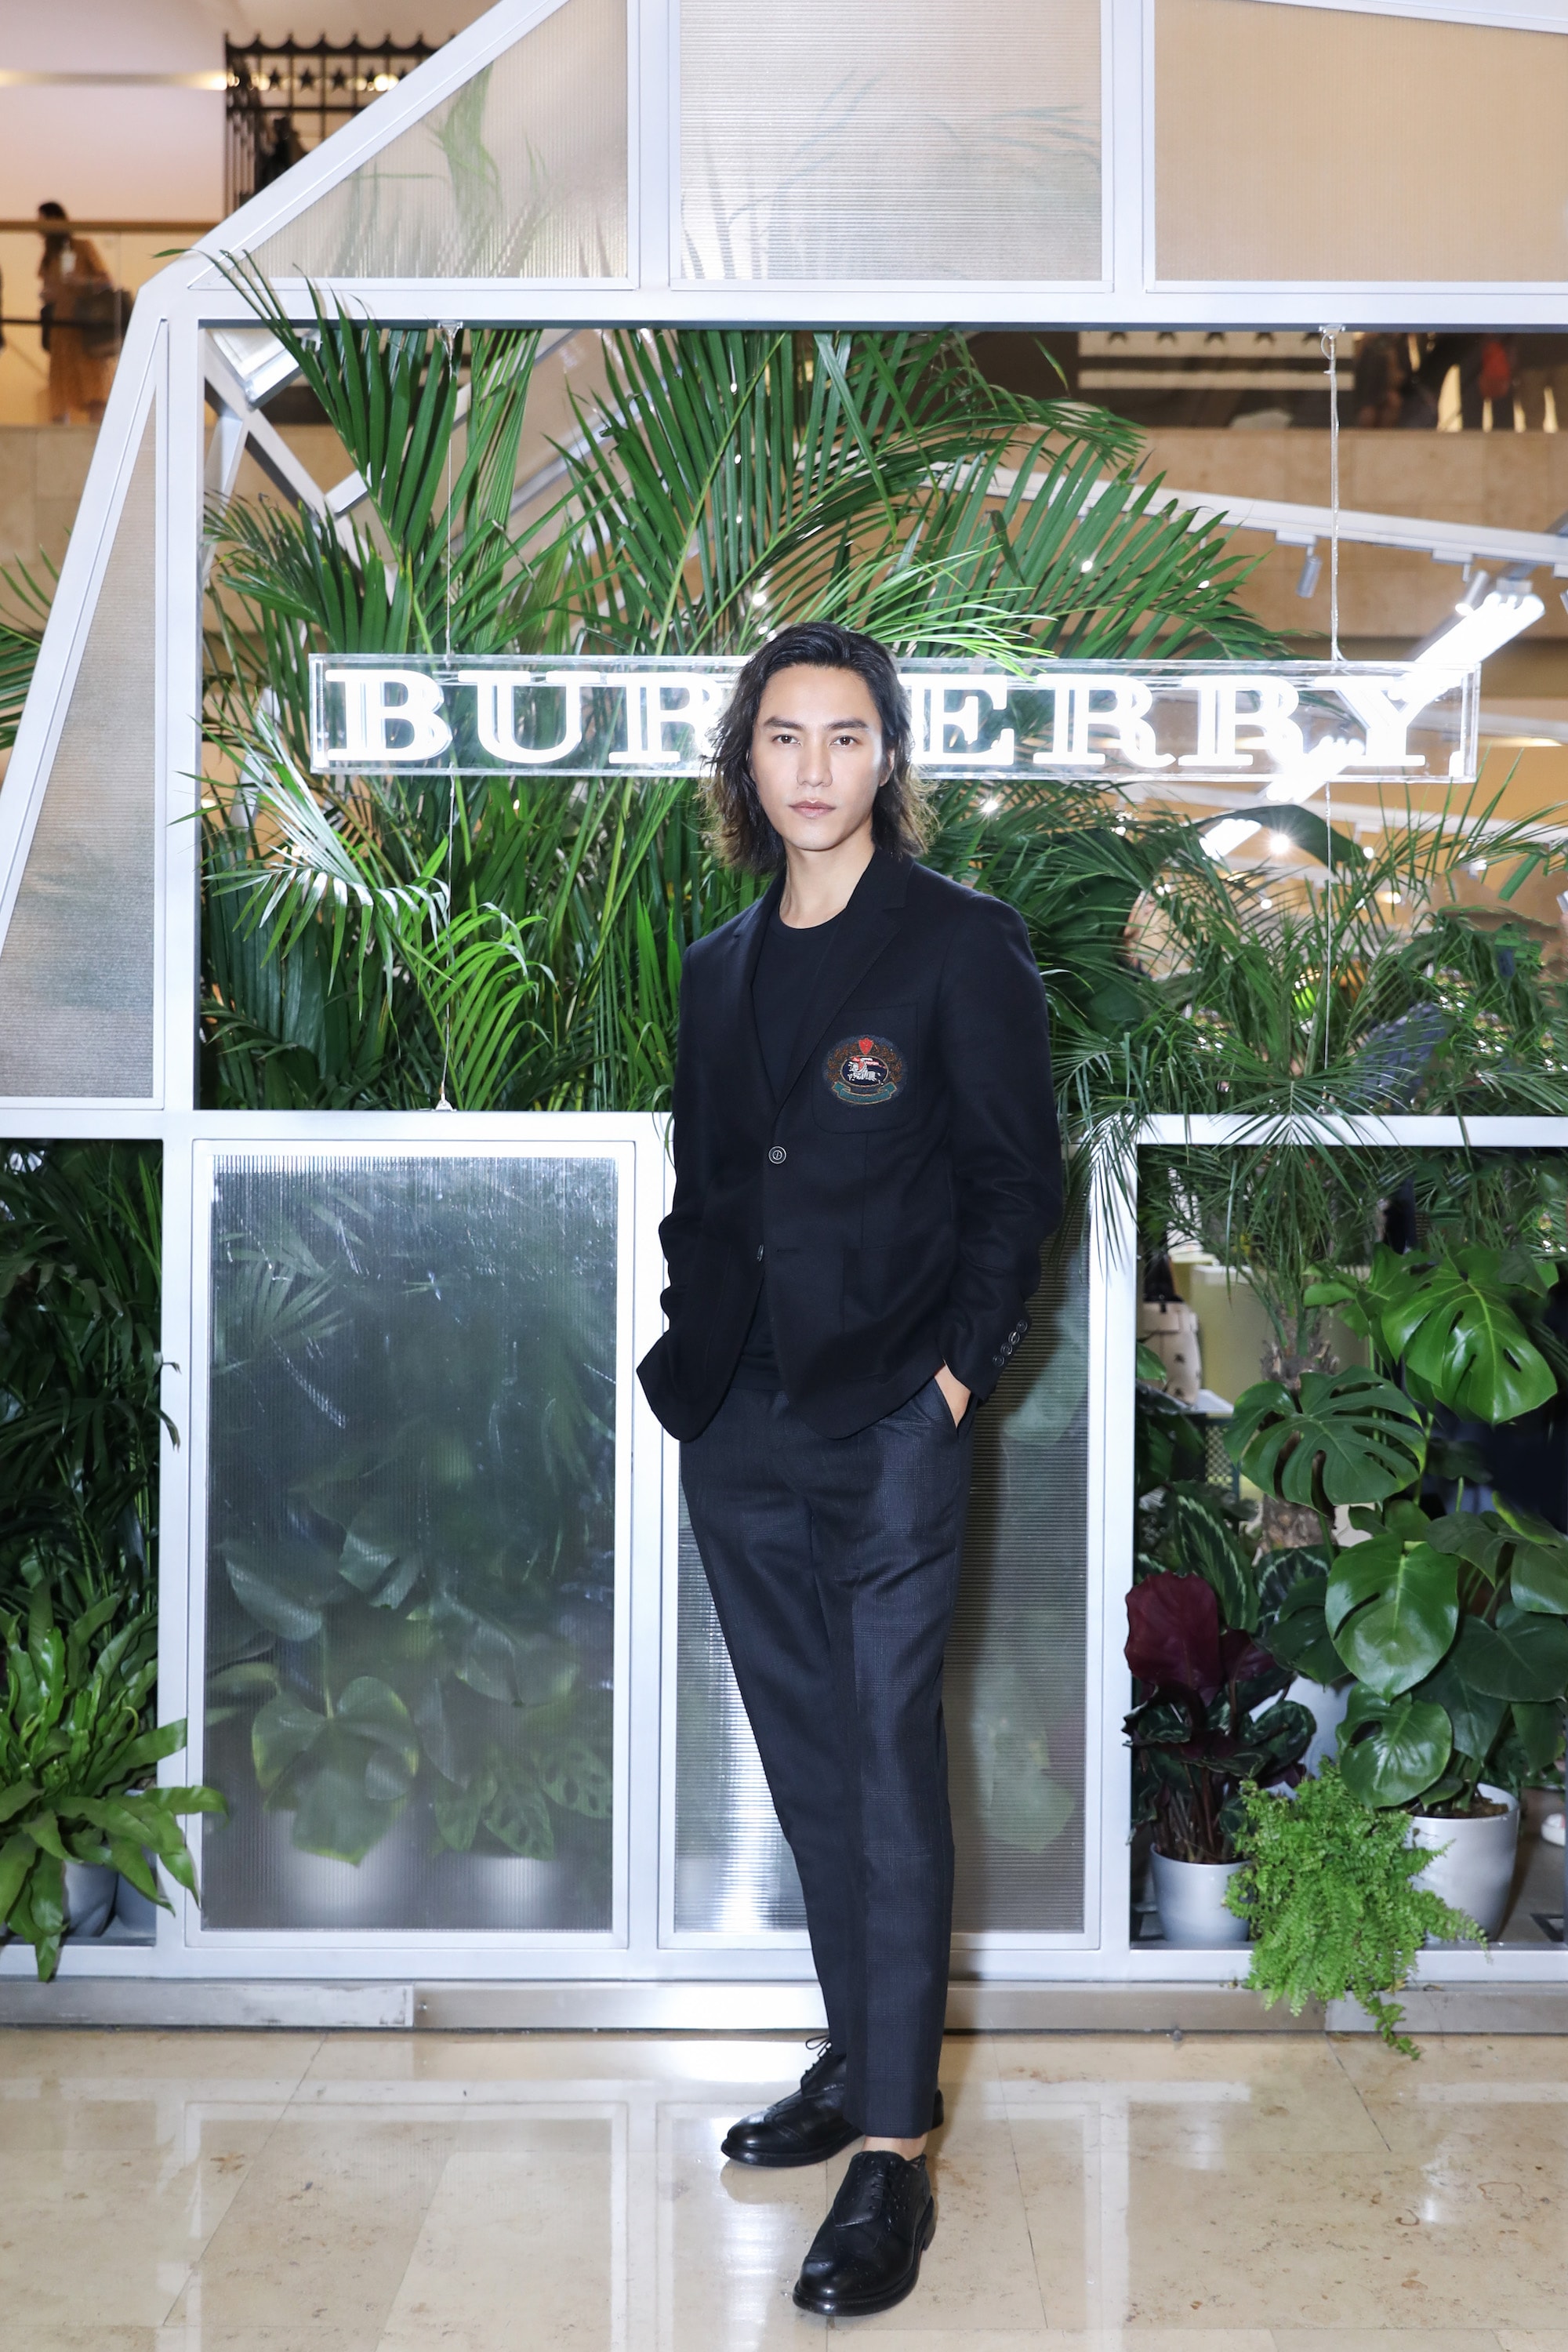 Burberry 于南京开设「The Belt 贝尔特包」限时精品店